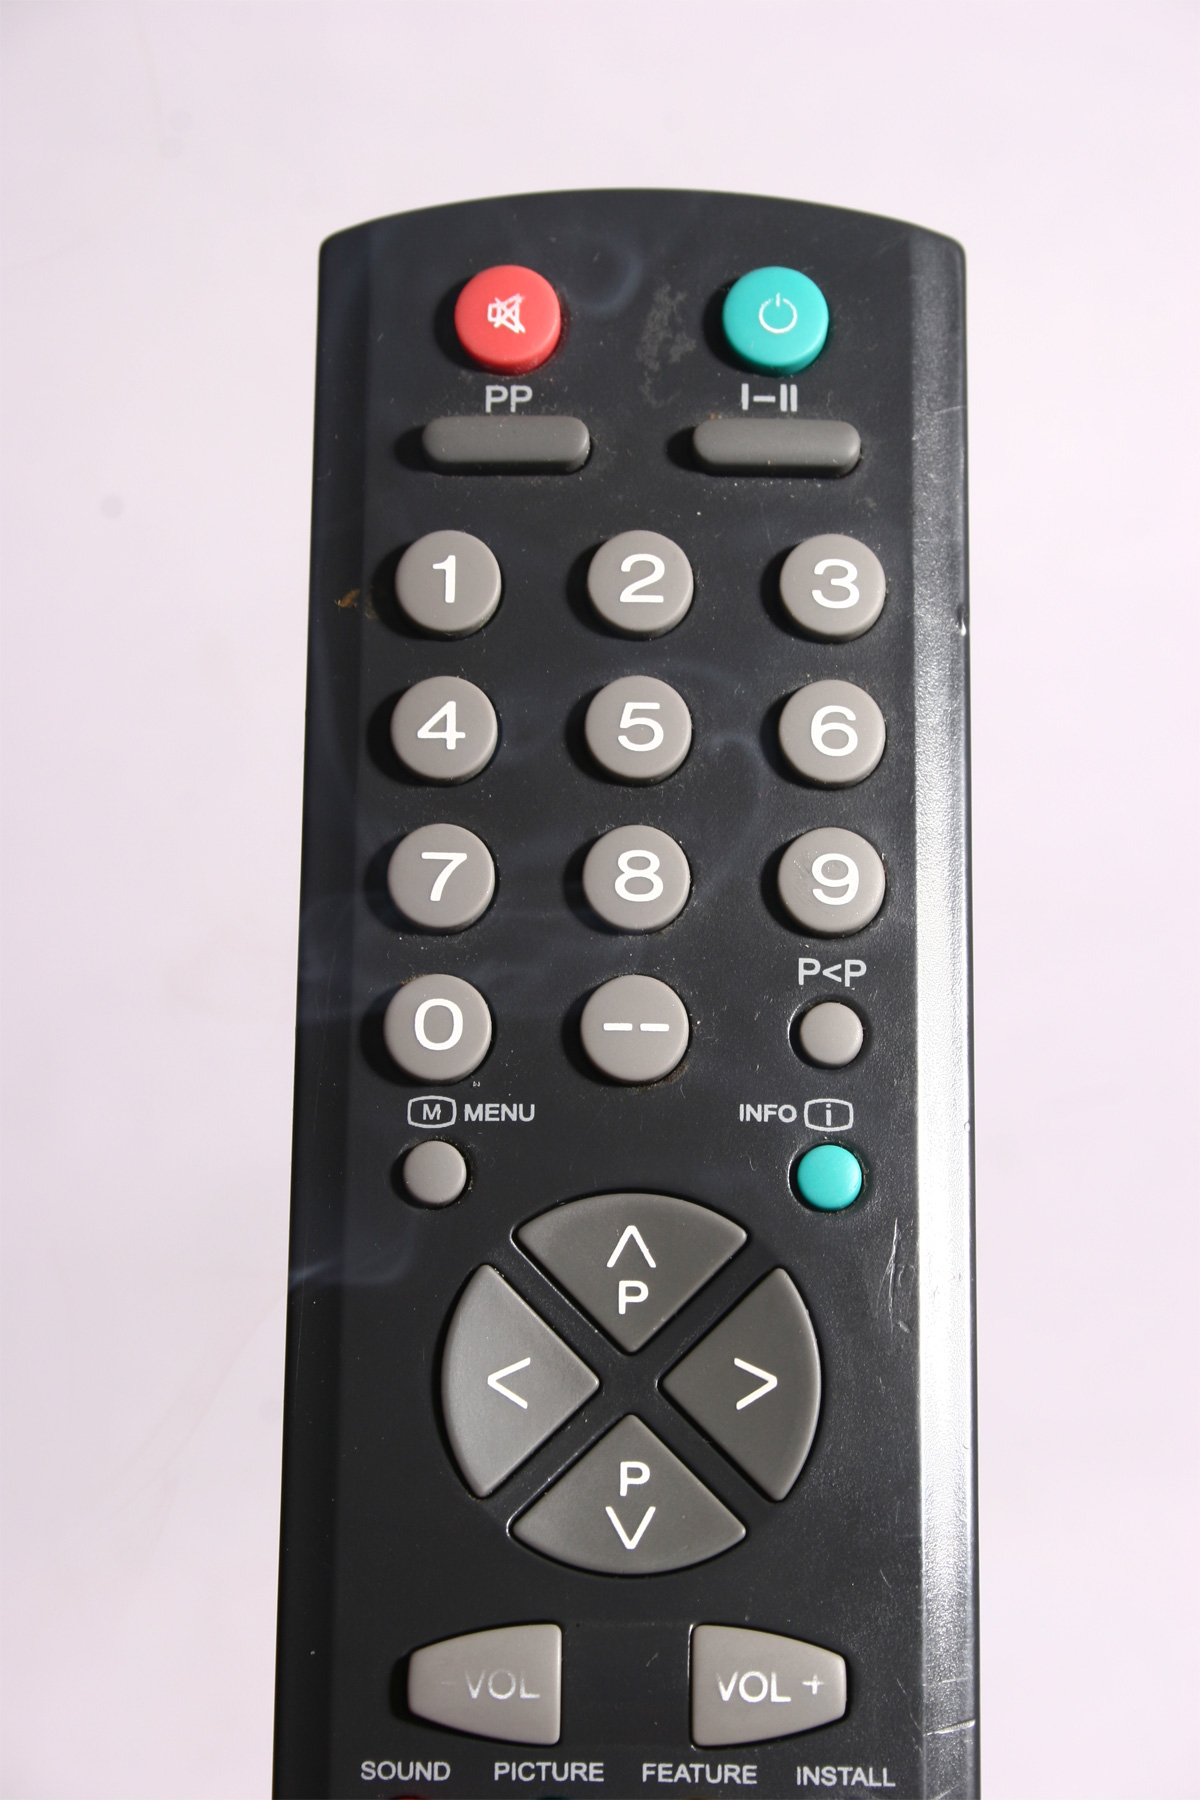 Television remote control